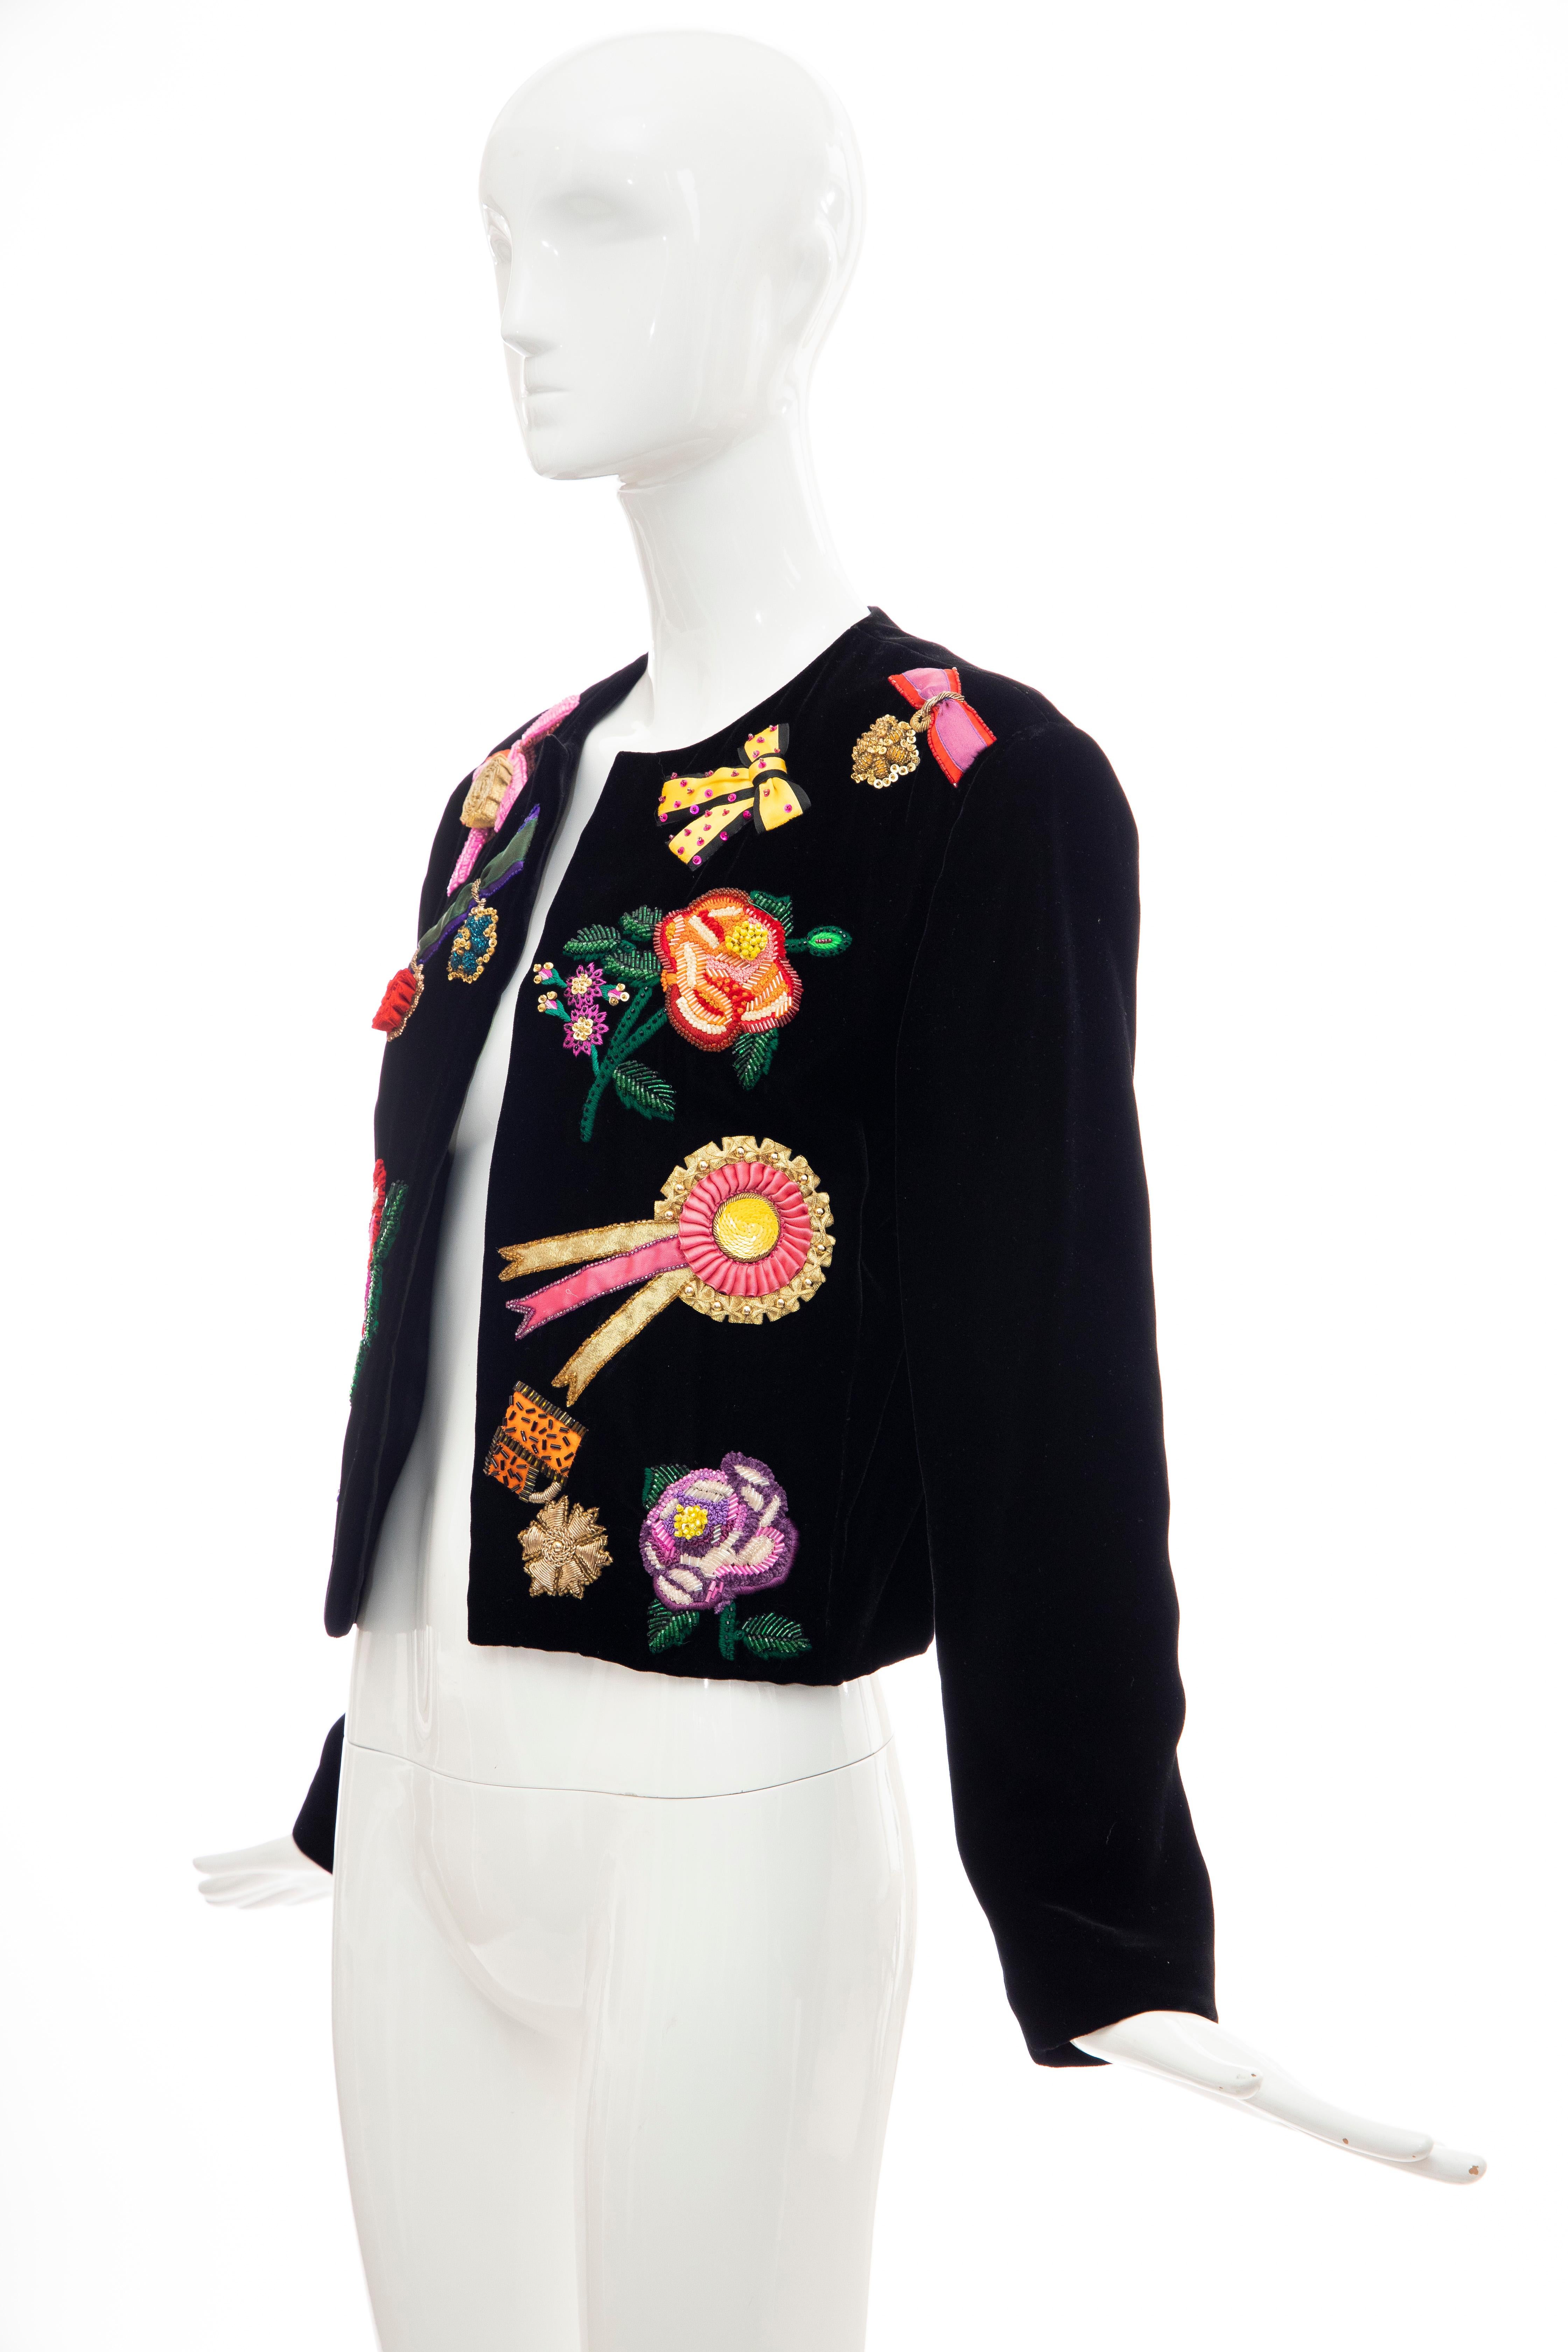 Christian Dior Marc Bohan Black Velvet Beaded Ribbon Embroidery Jacket, Fall 1988 6